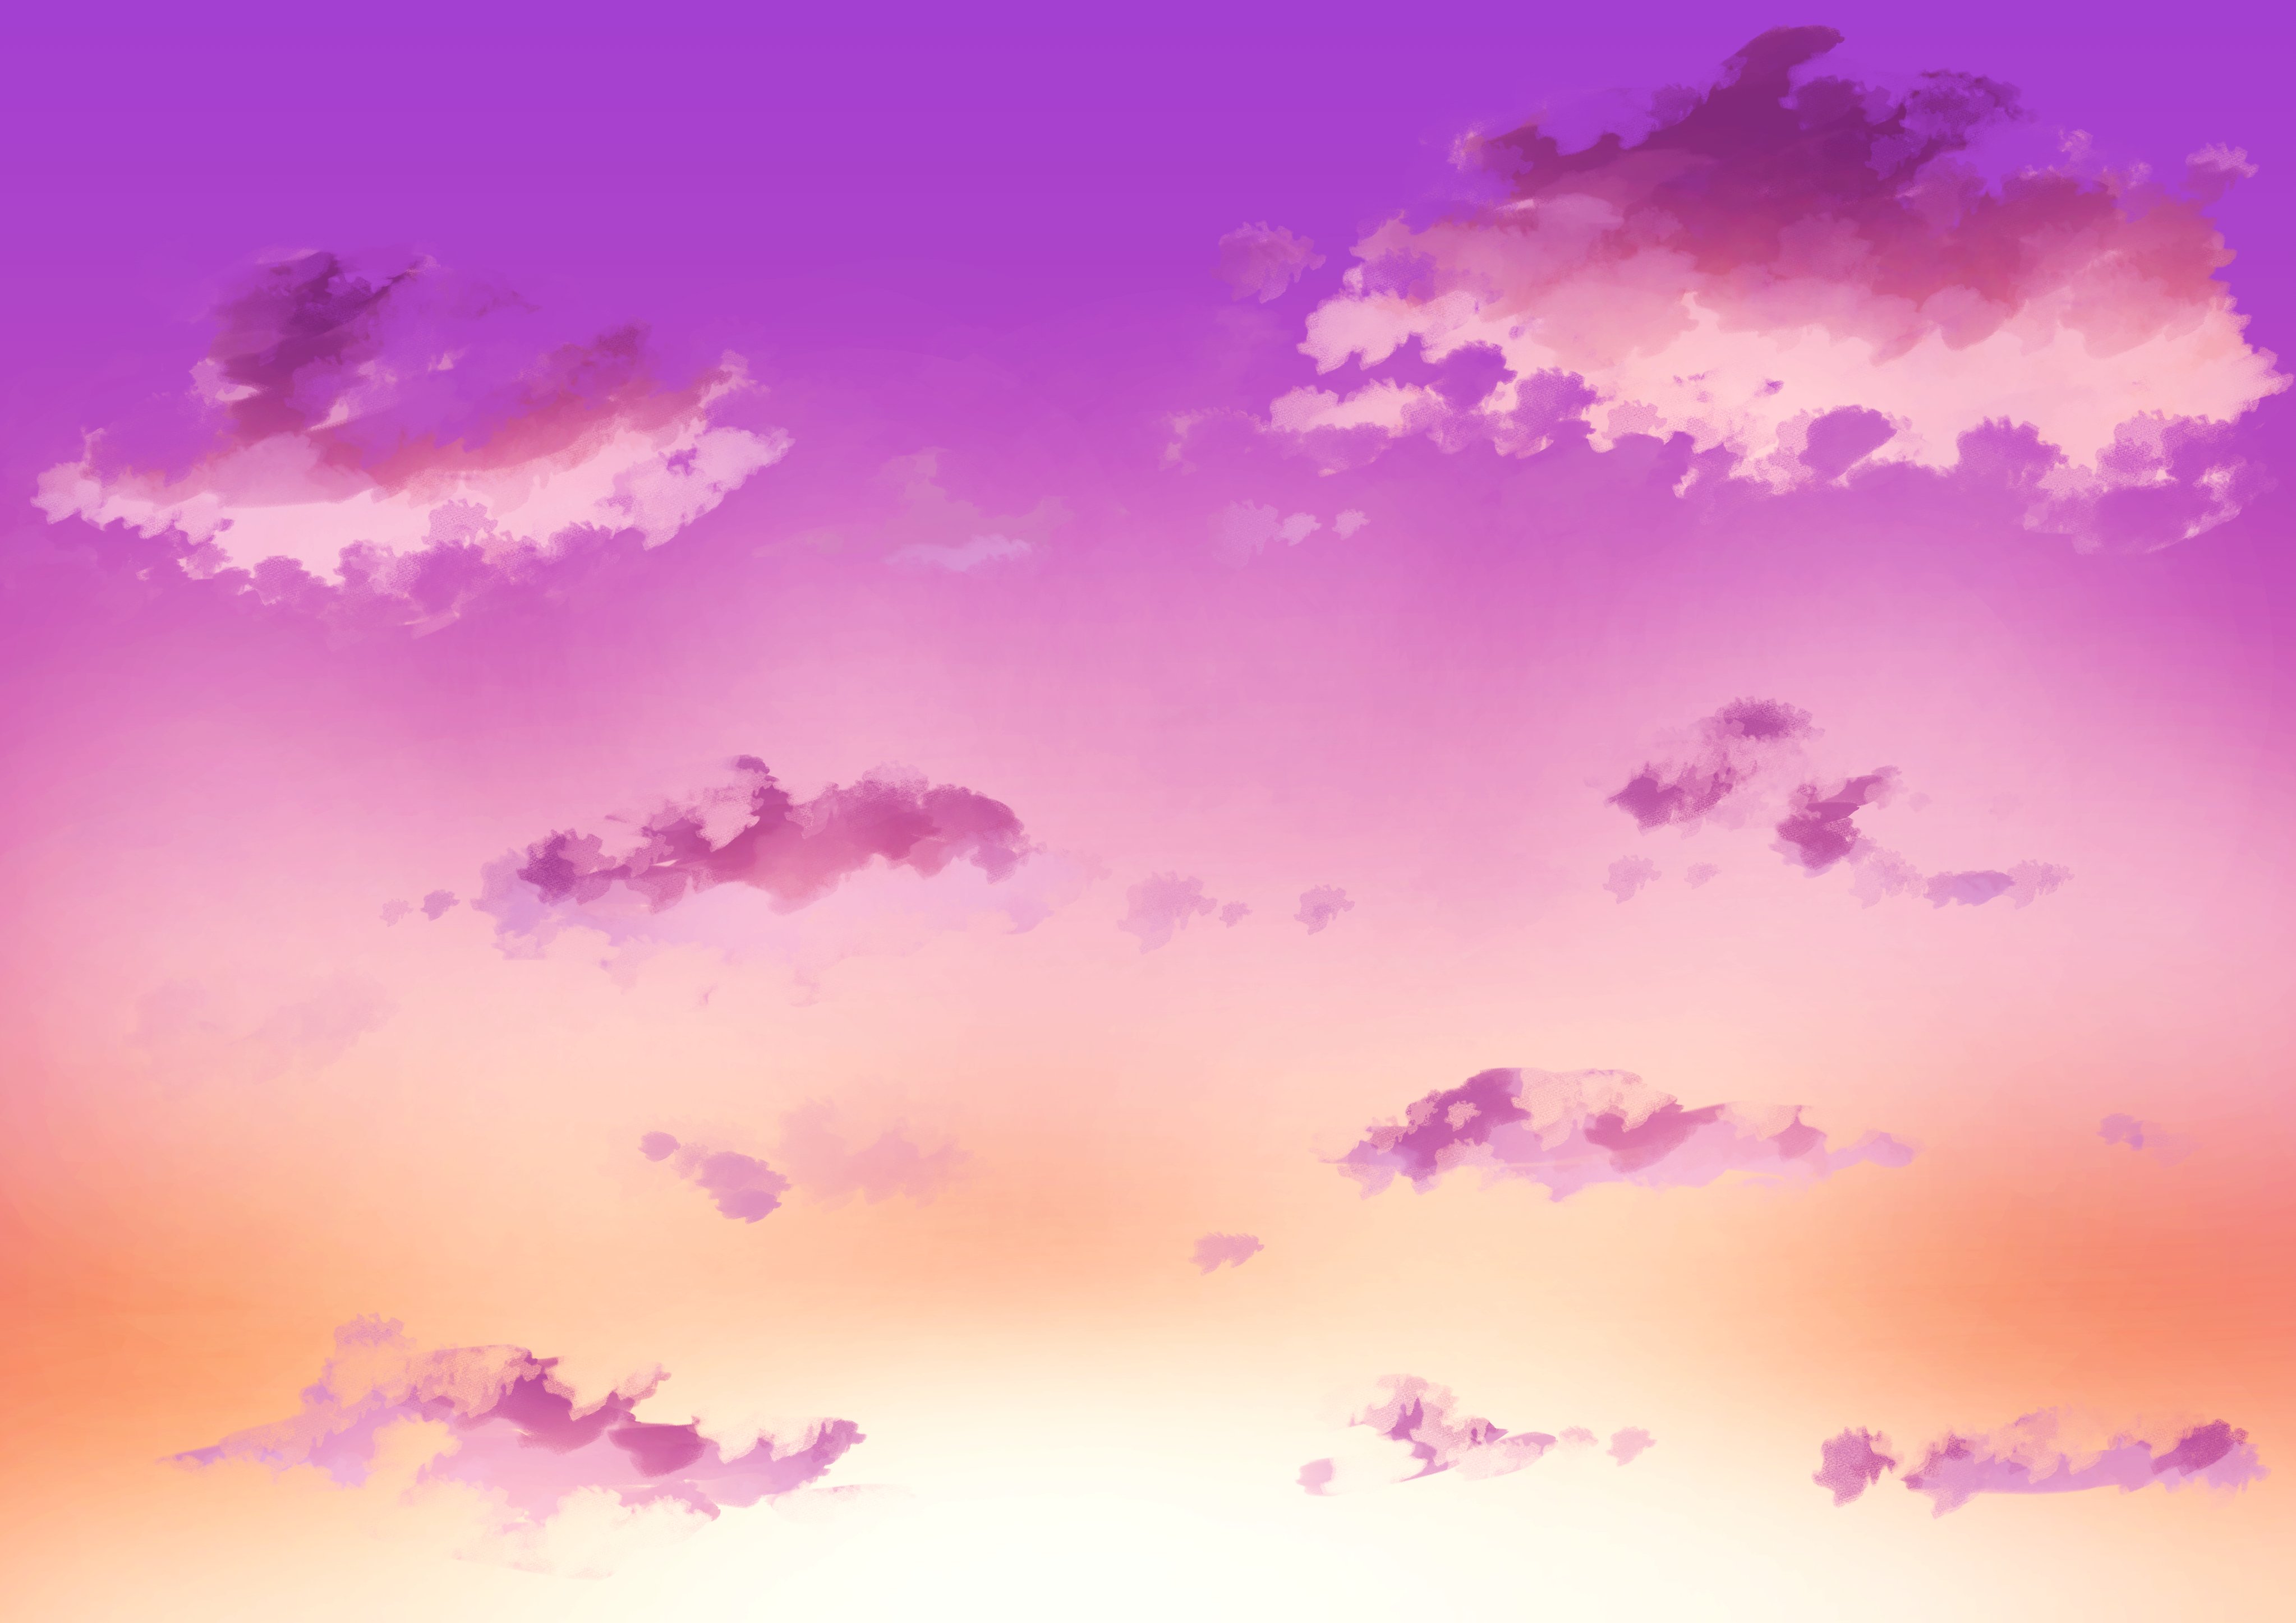 Twitter 上的 マオ 空のフリー背景セットを描きました 空 イラスト フリー素材 夜空 入道雲 オリジナル Illustration 月 雲 T Co Luvwwroygl Twitter